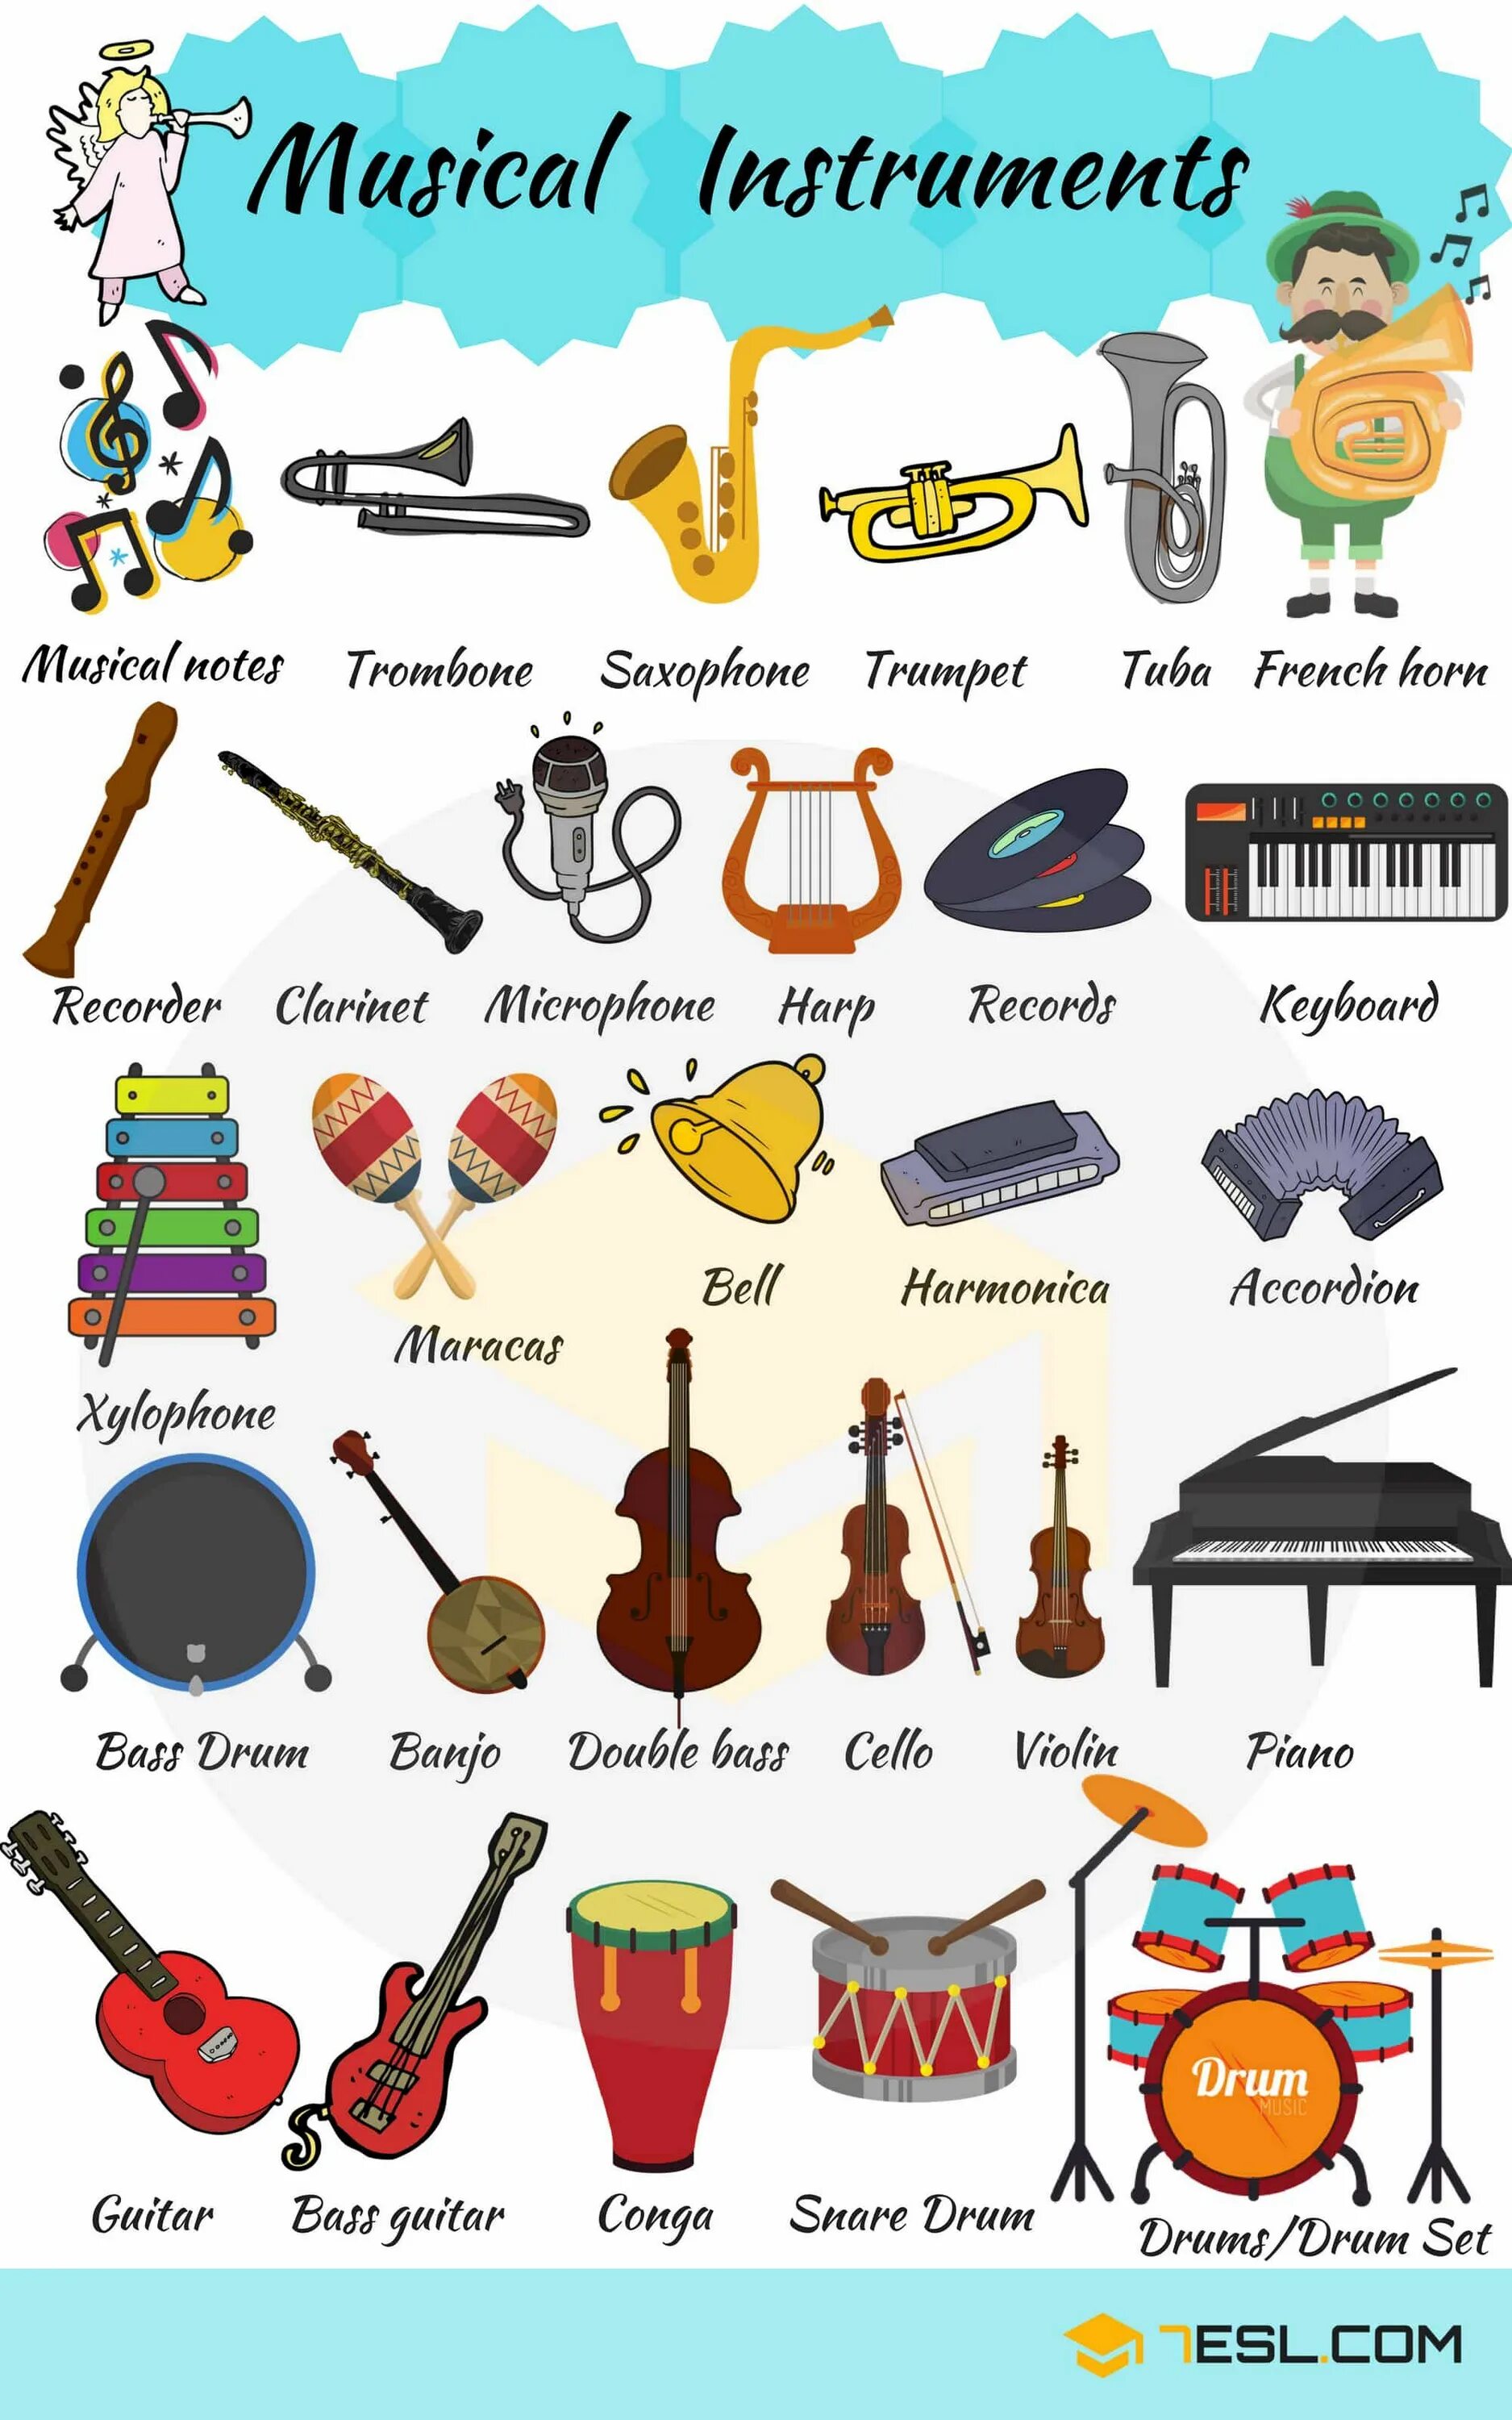 Урок английский язык музыка. Name of Musical instruments in English. Музыкальные инструменты на английском. Муз инструменты на английском. Музыкальные инструменты названия.